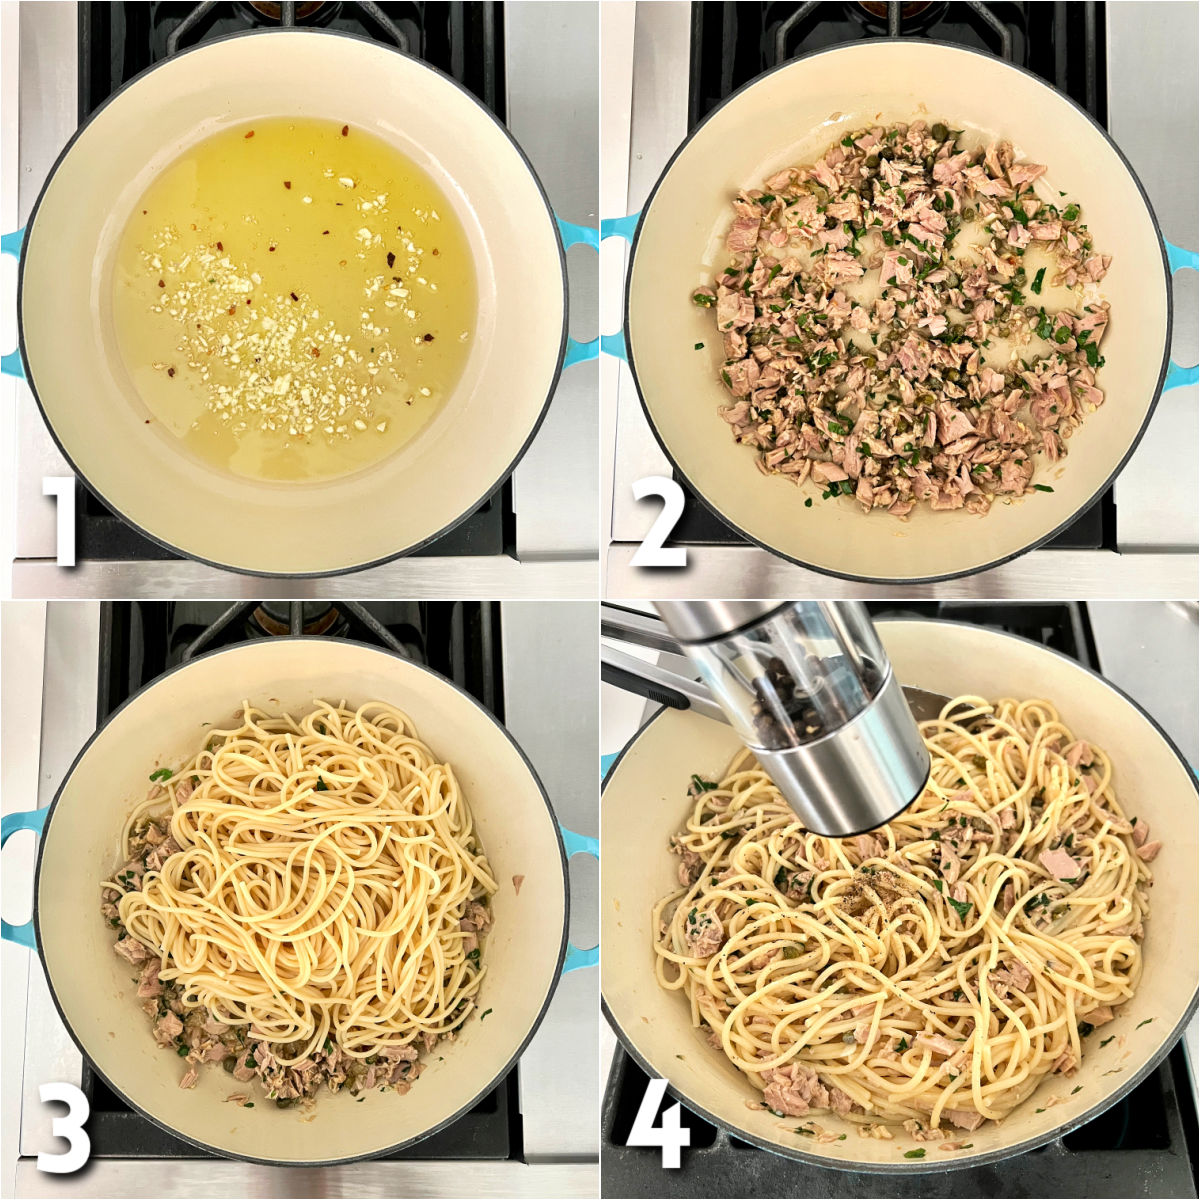 Steps 1-4 how to make tuna pasta.